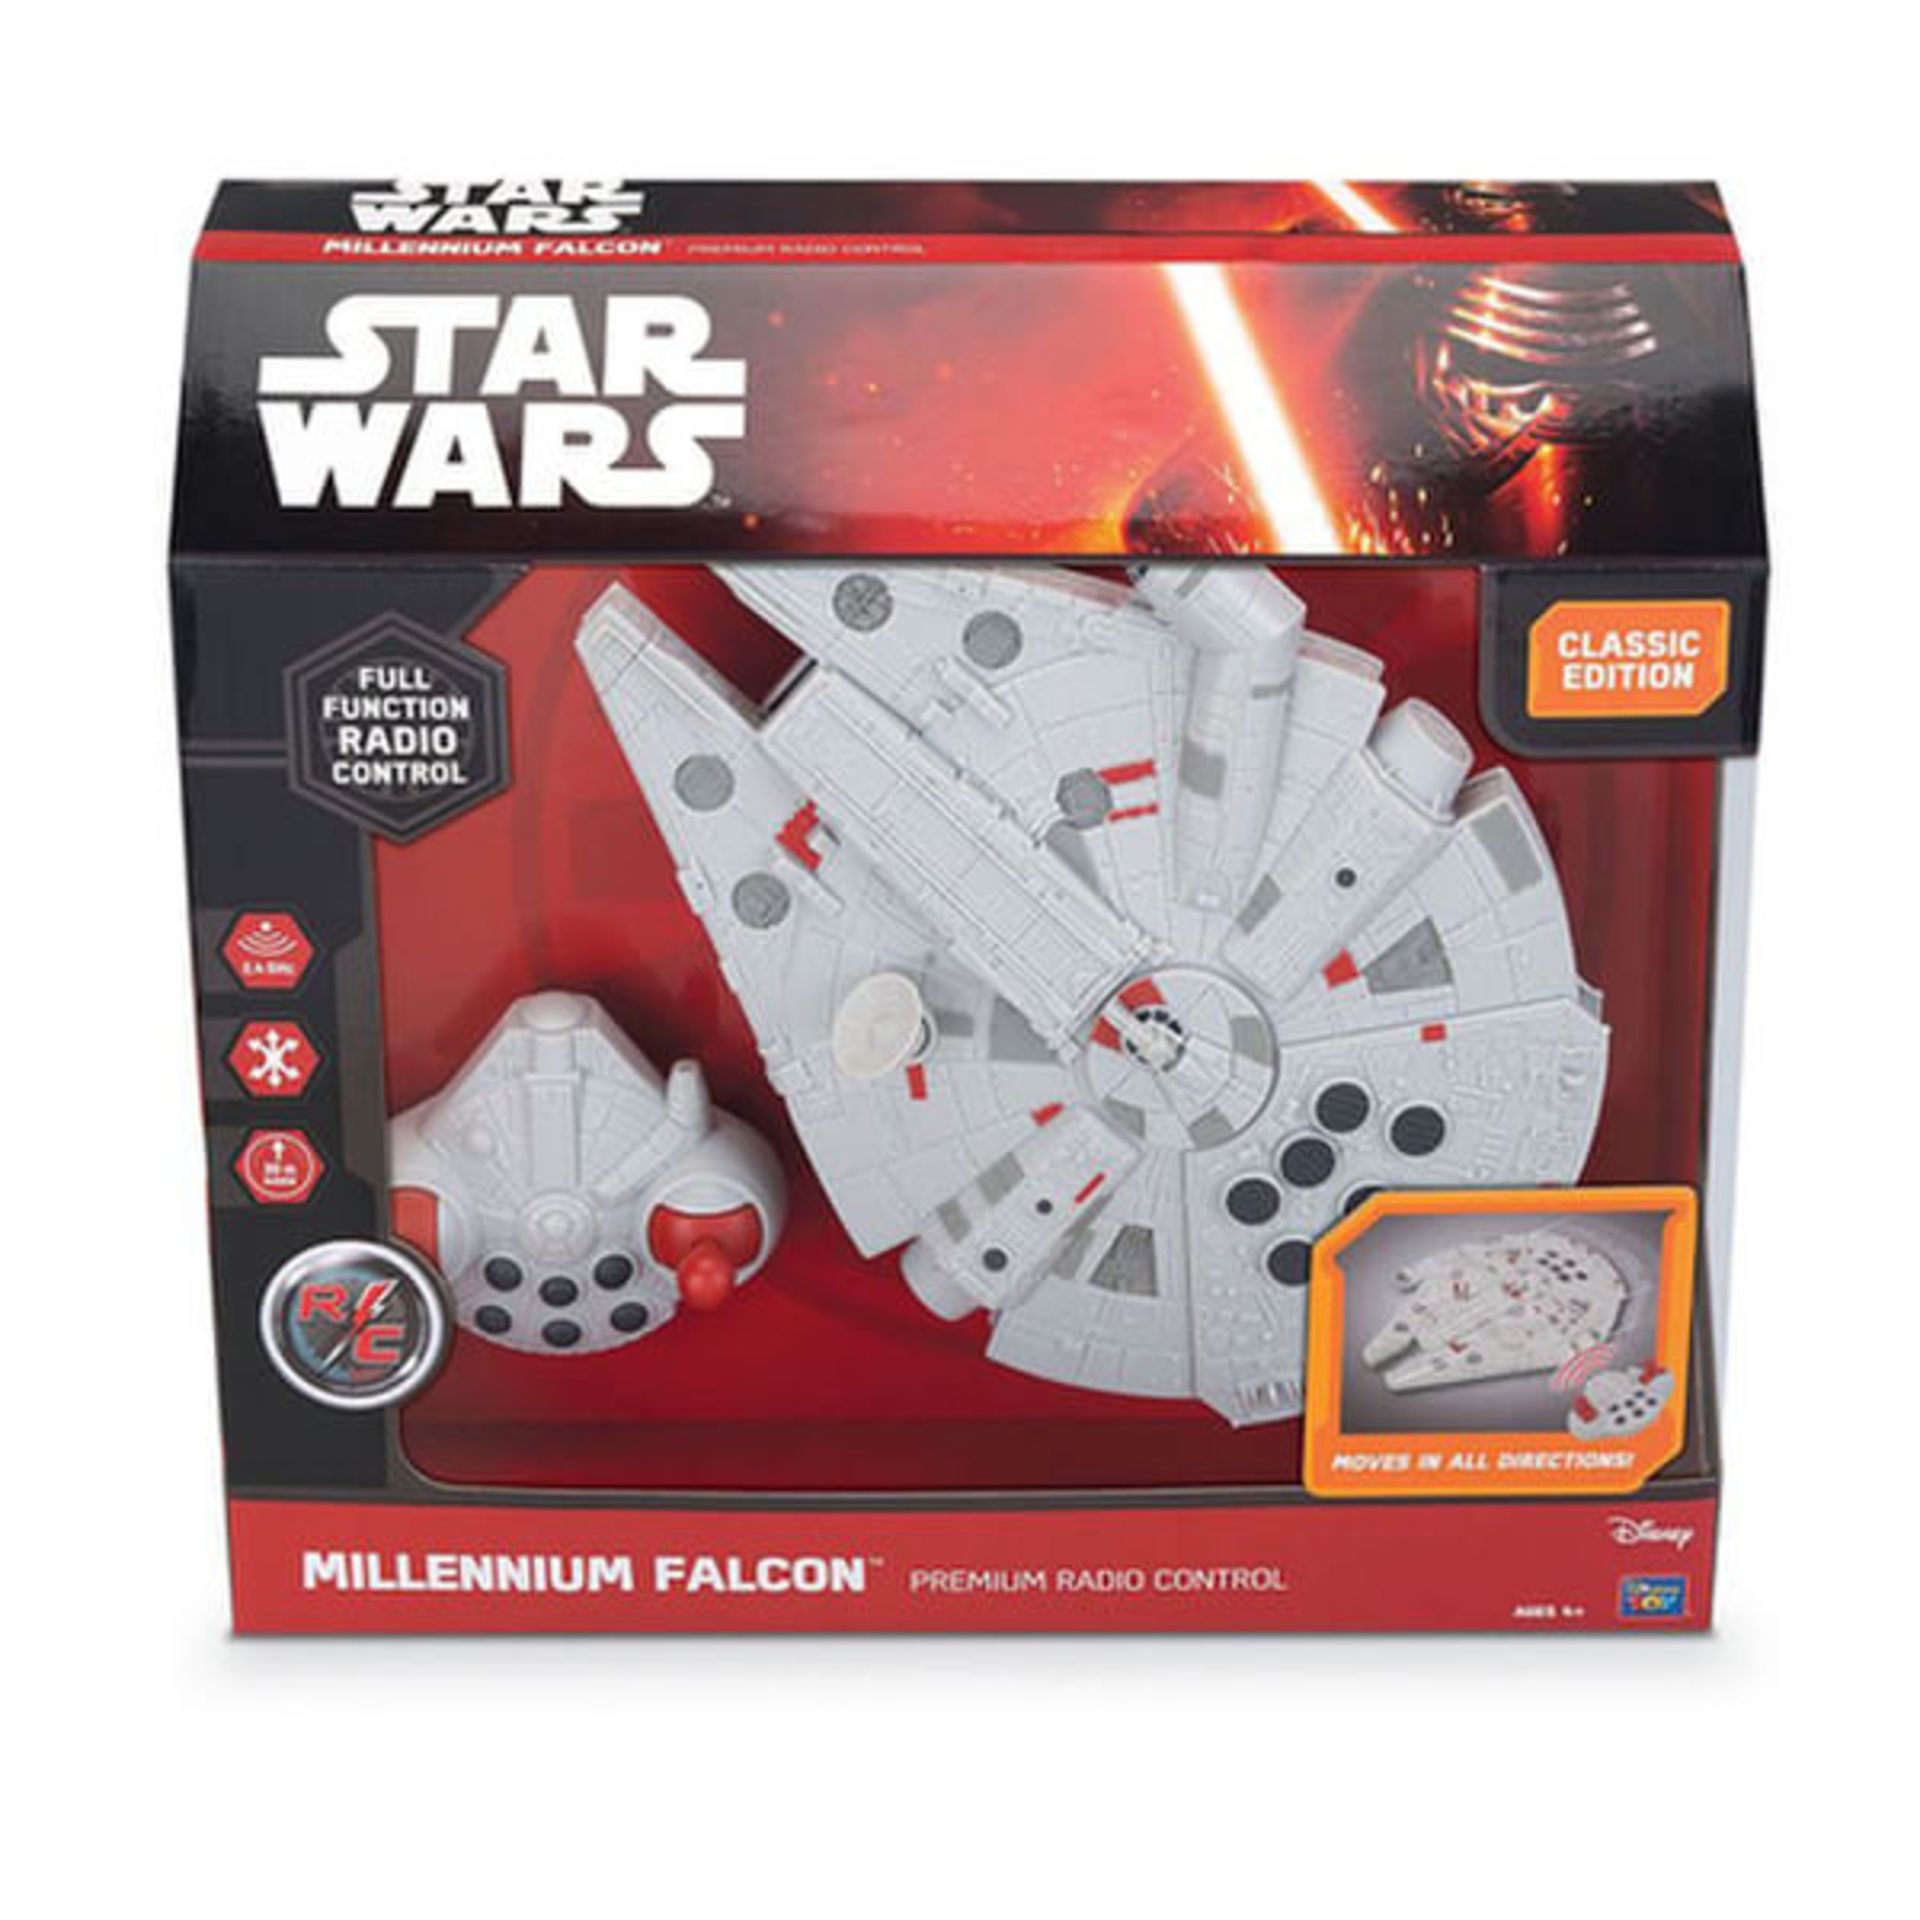 + VAT Brand New Star Wars Millennium Falcon Remote Control Vehicle Amazon Price £23.91